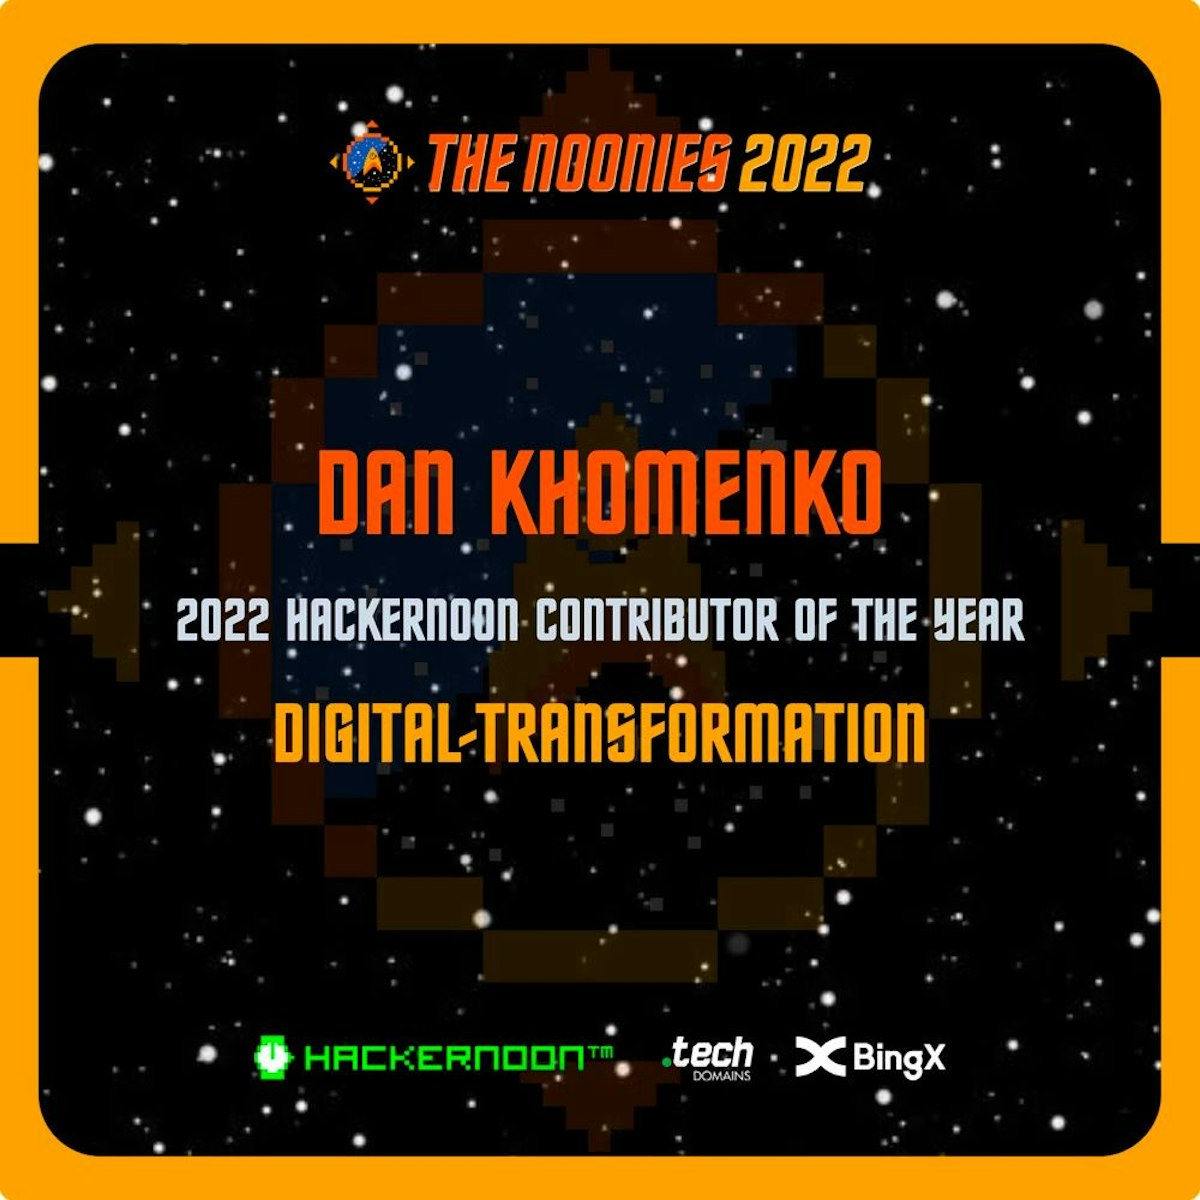 featured image - Meet Noonies 2022 Winner - Dan Khomenko - Contributor of the Year in Digital Transformation